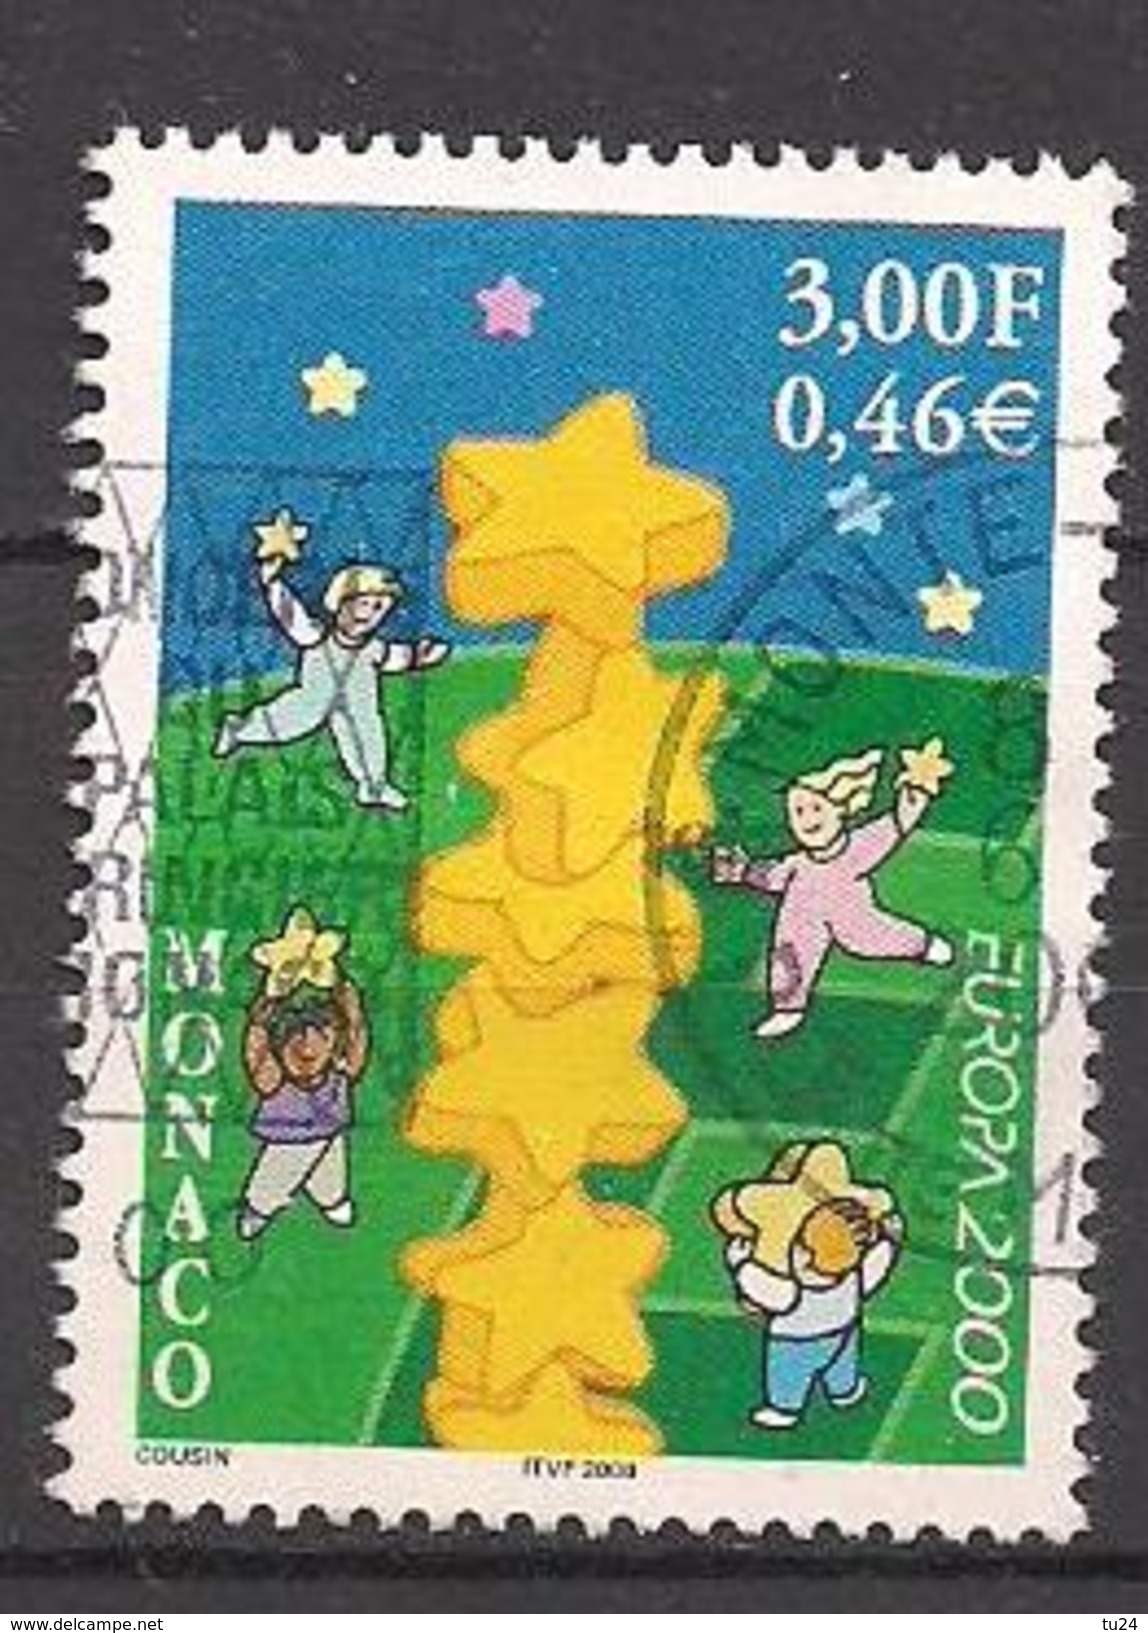 Monaco  (2000)  Mi.Nr.  2499  Gest. / Used  (13fg03)  EUROPA - Used Stamps